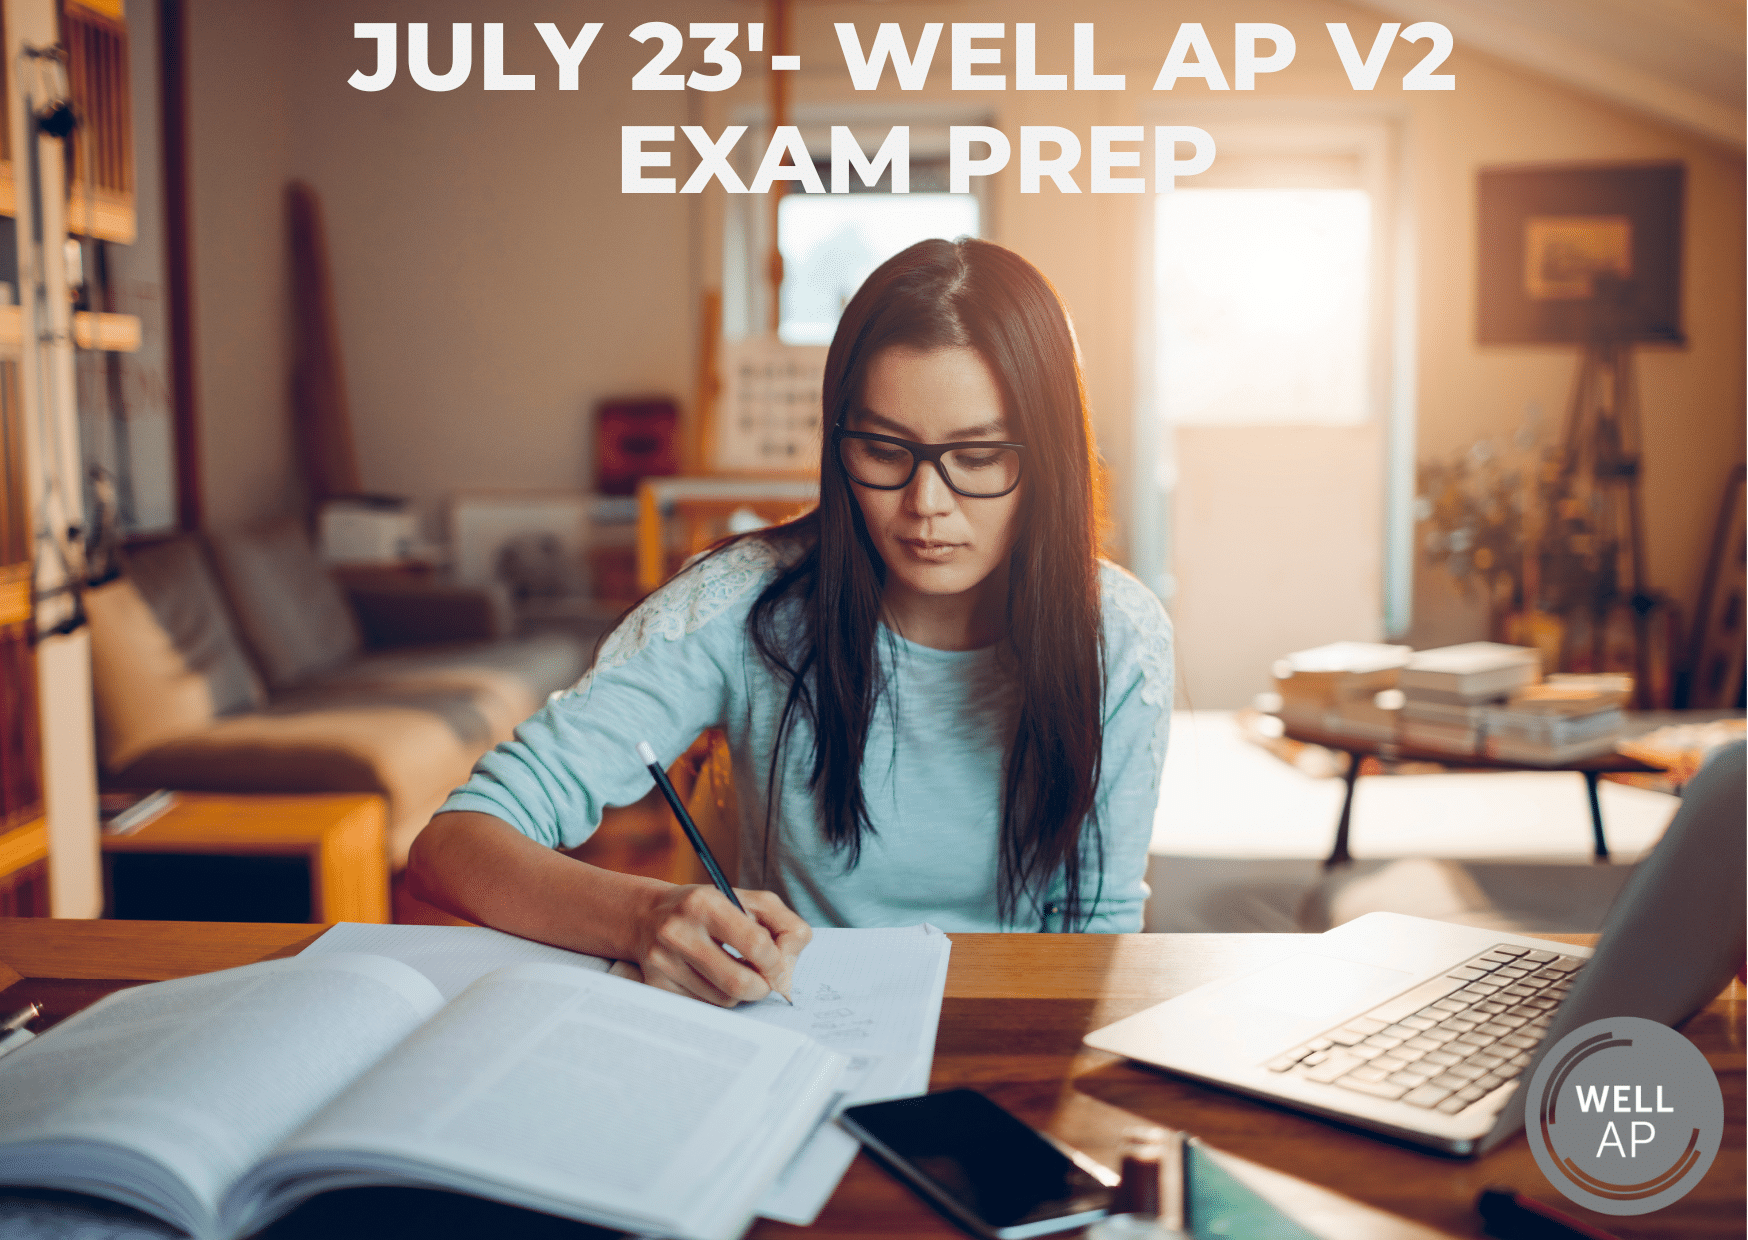 WELL AP exam prep July